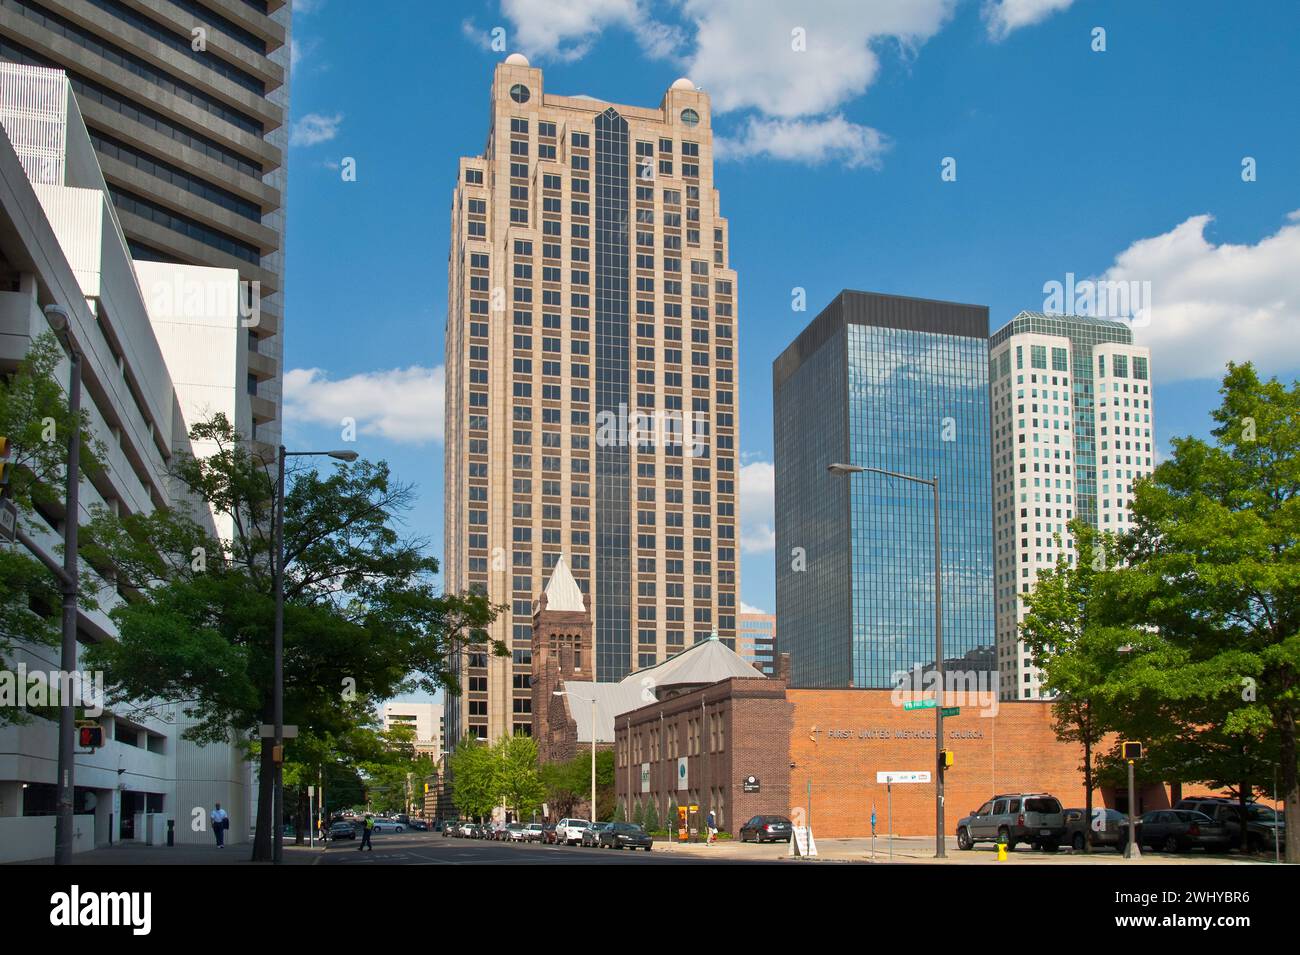 city center of Birmingham, Alabama - USA Stock Photo